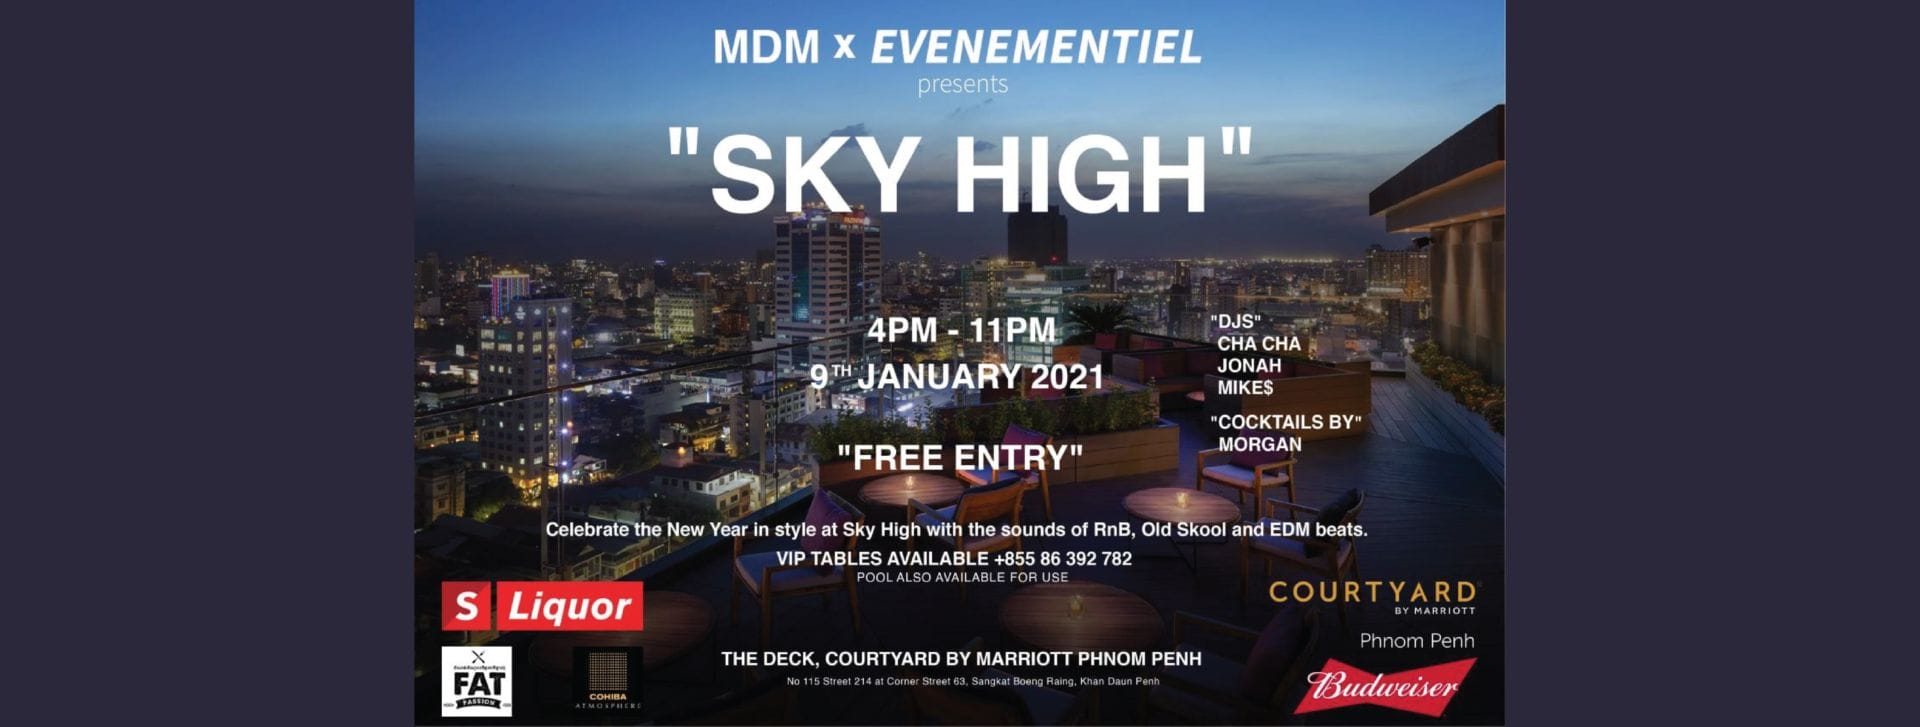 “sky High” – Mdm X Evenementiel Kh At Courtyard By Marriott - S Liquor